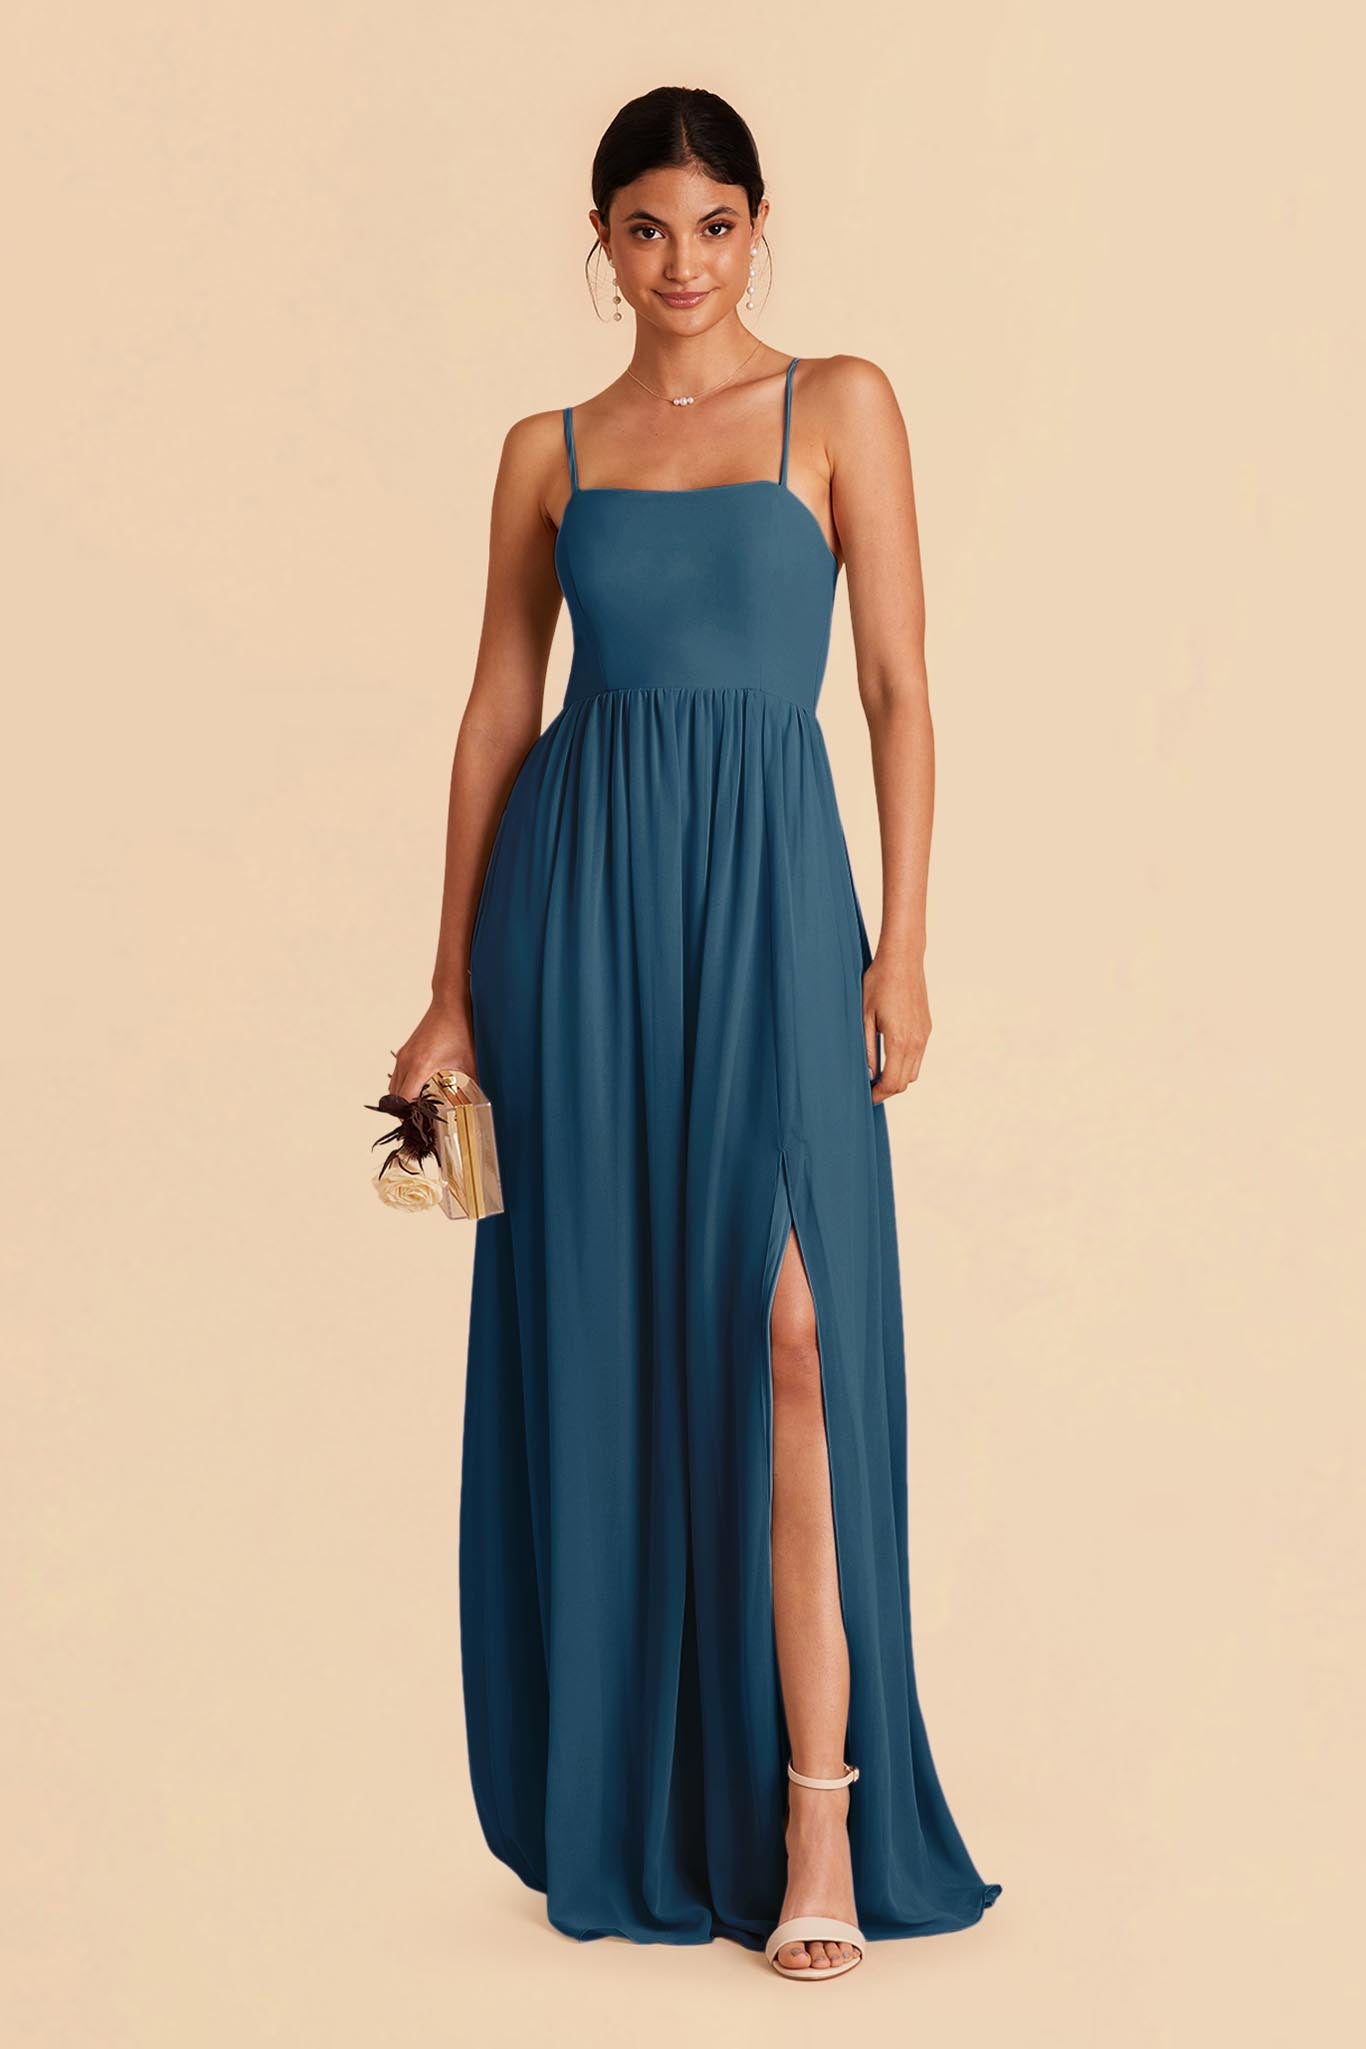 Ocean Blue August Convertible Dress by Birdy Grey